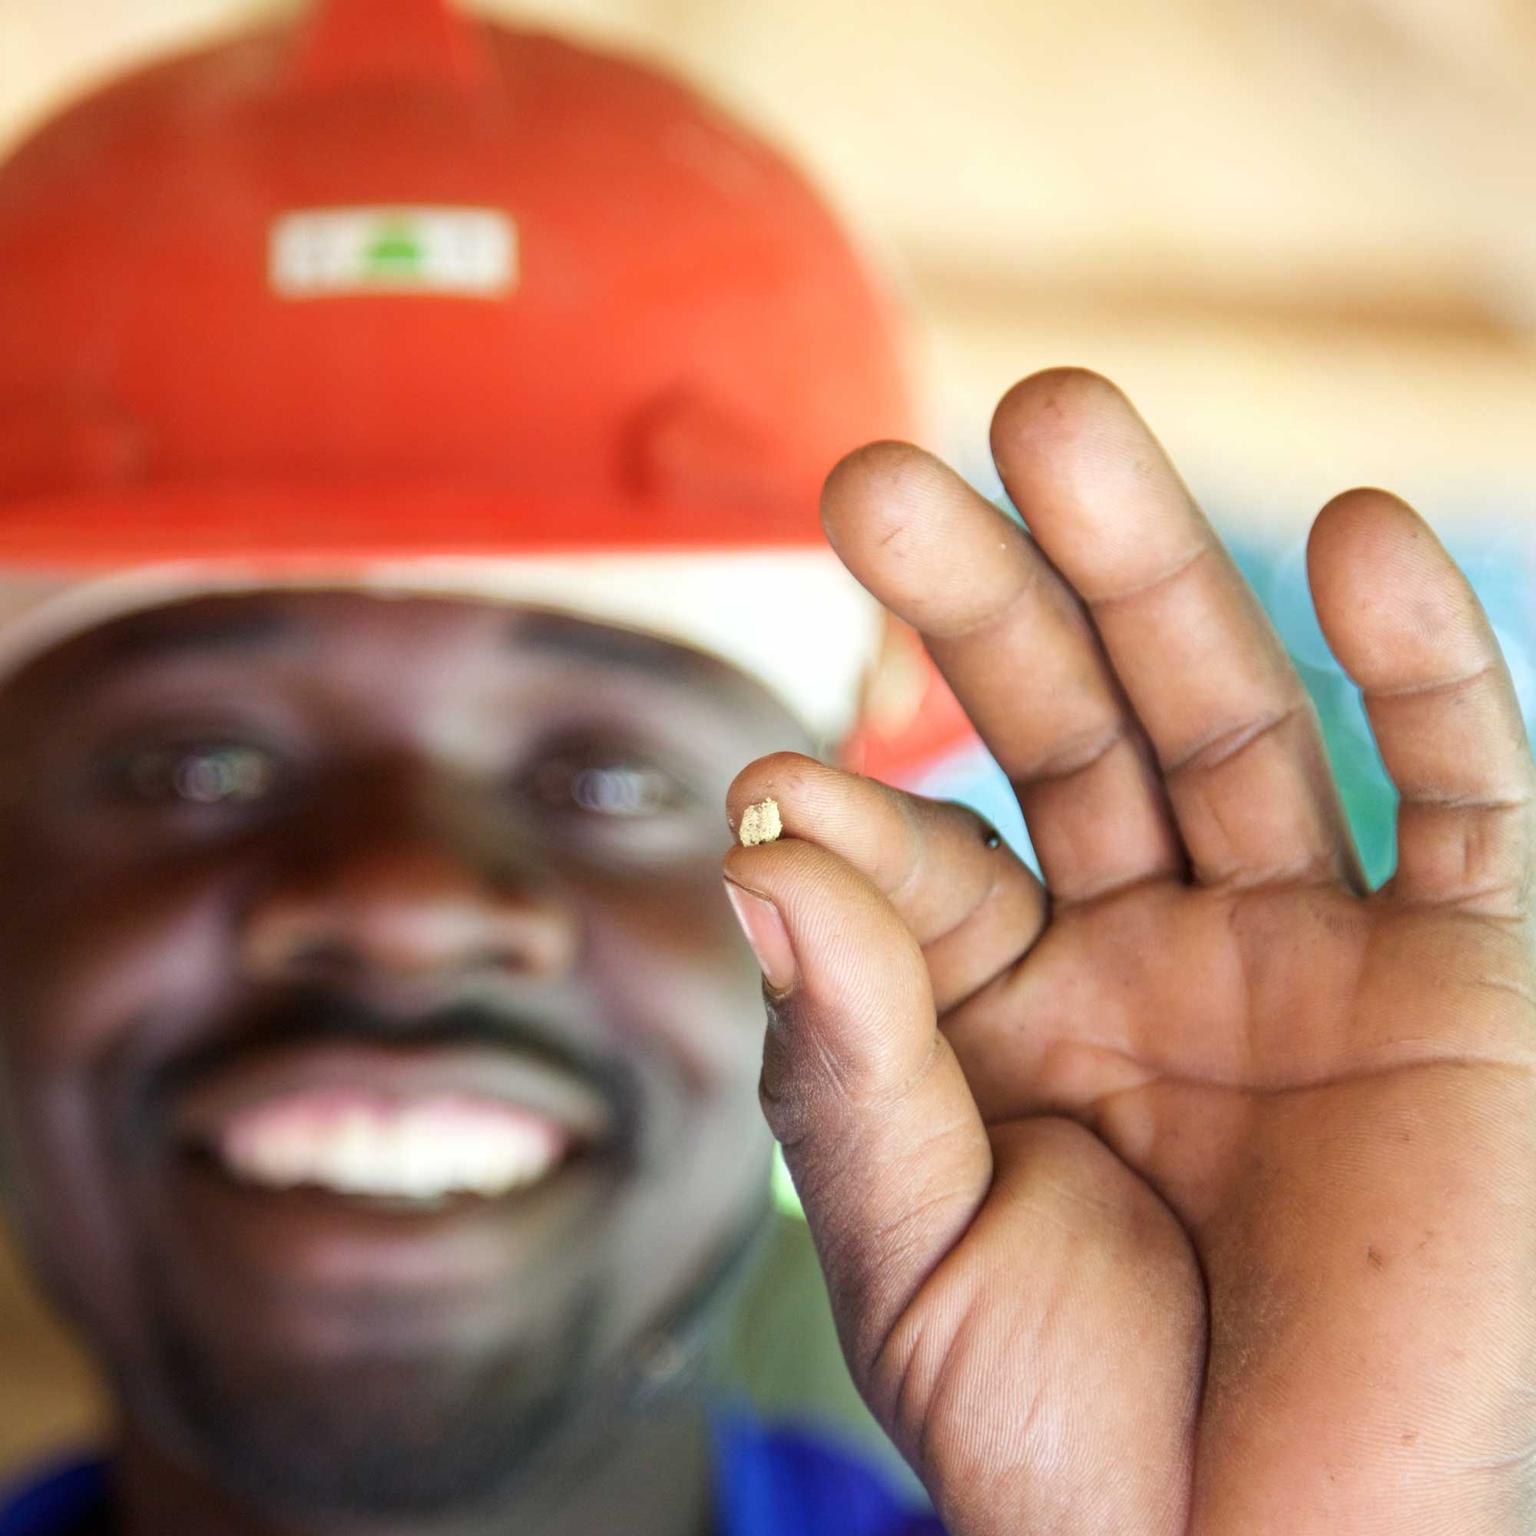 African Fairtrade gold miner